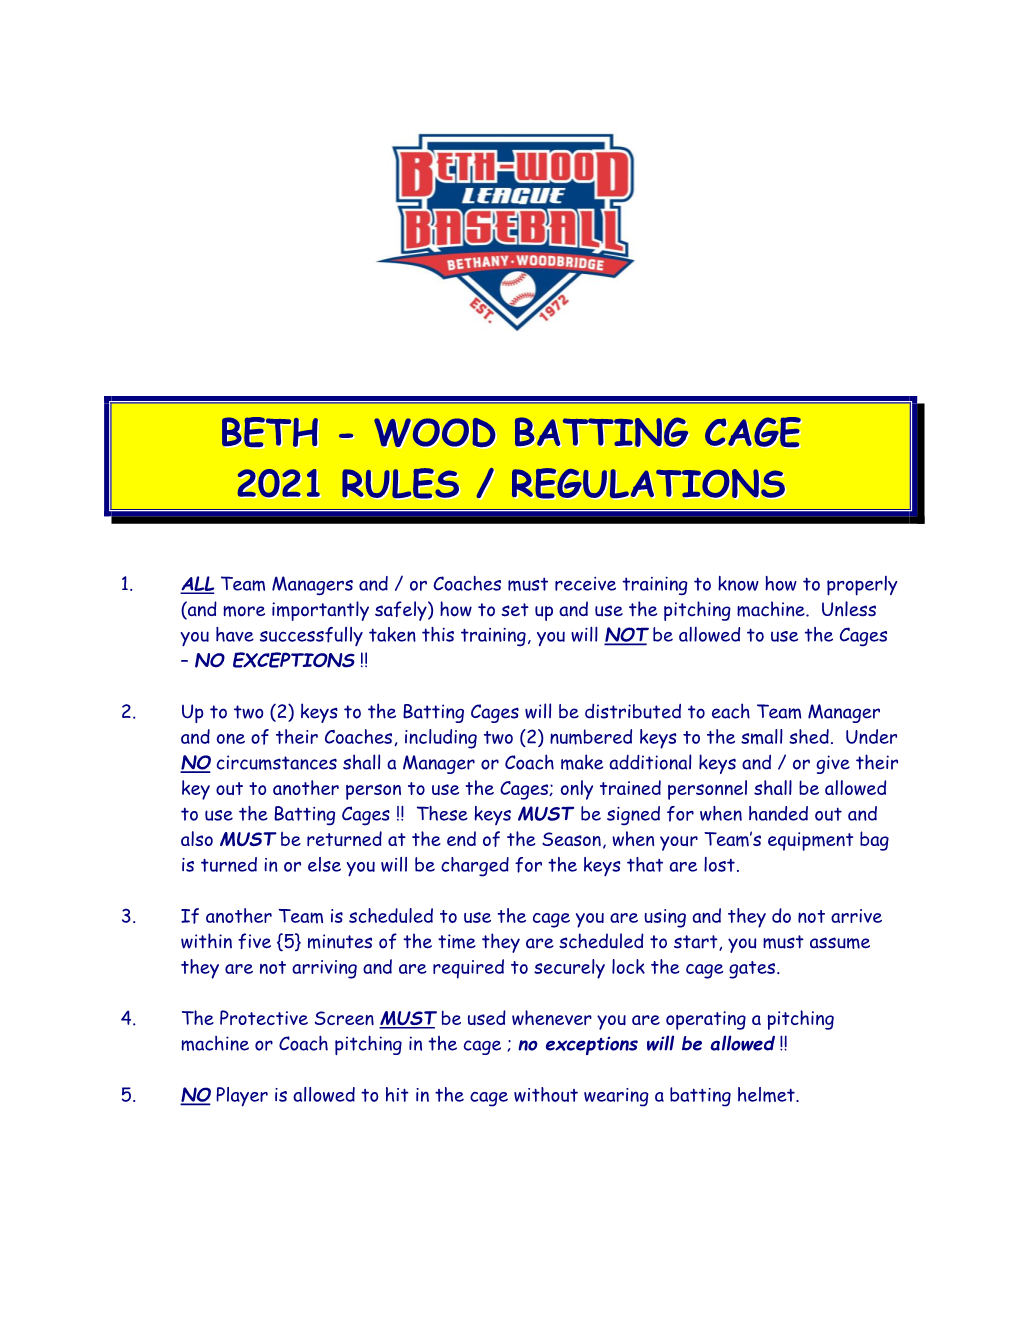 Beth - Wood Batting Cage 2021 Rules / Regulations